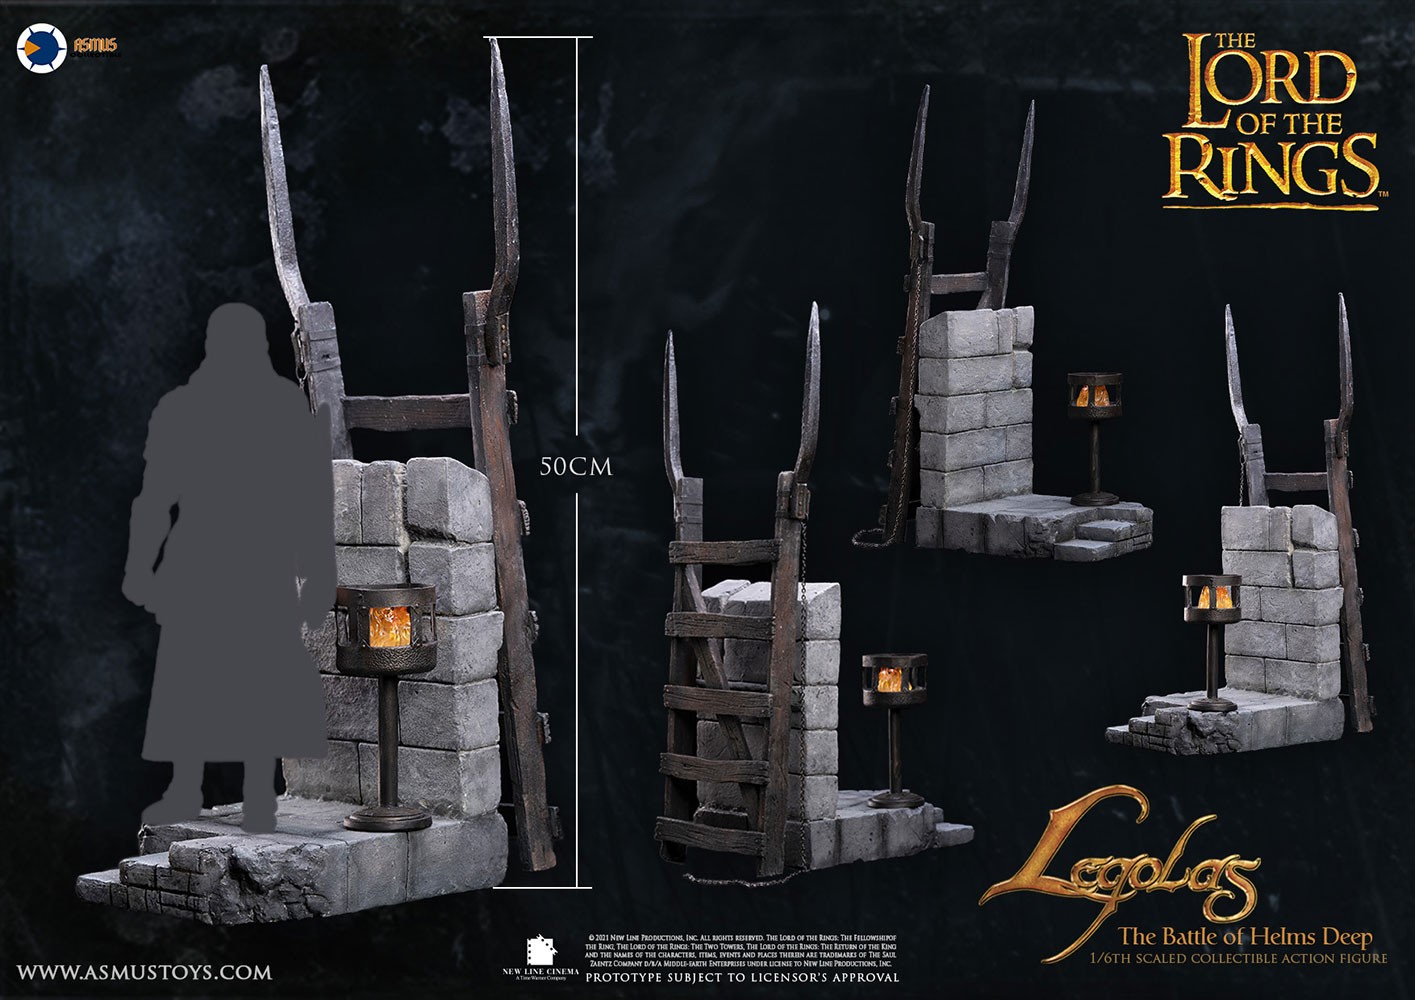 Legolas at Helm's Deep Exclusive Edition - Prototype Shown